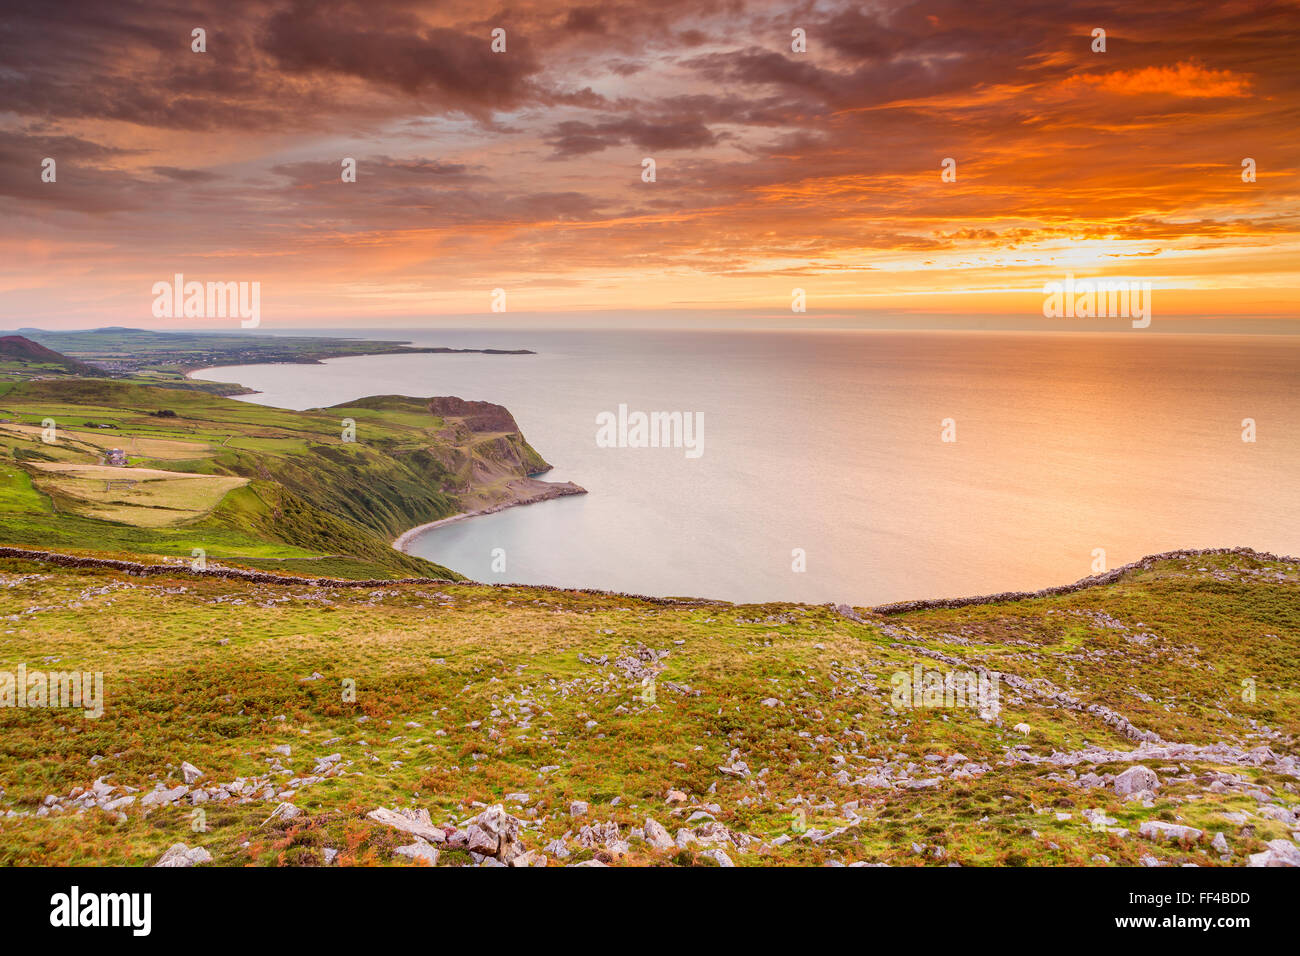 Sunset over Caernarfon Bay, Llithfaen, Gwynedd, Wales, United Kingdom, Europe. Stock Photo